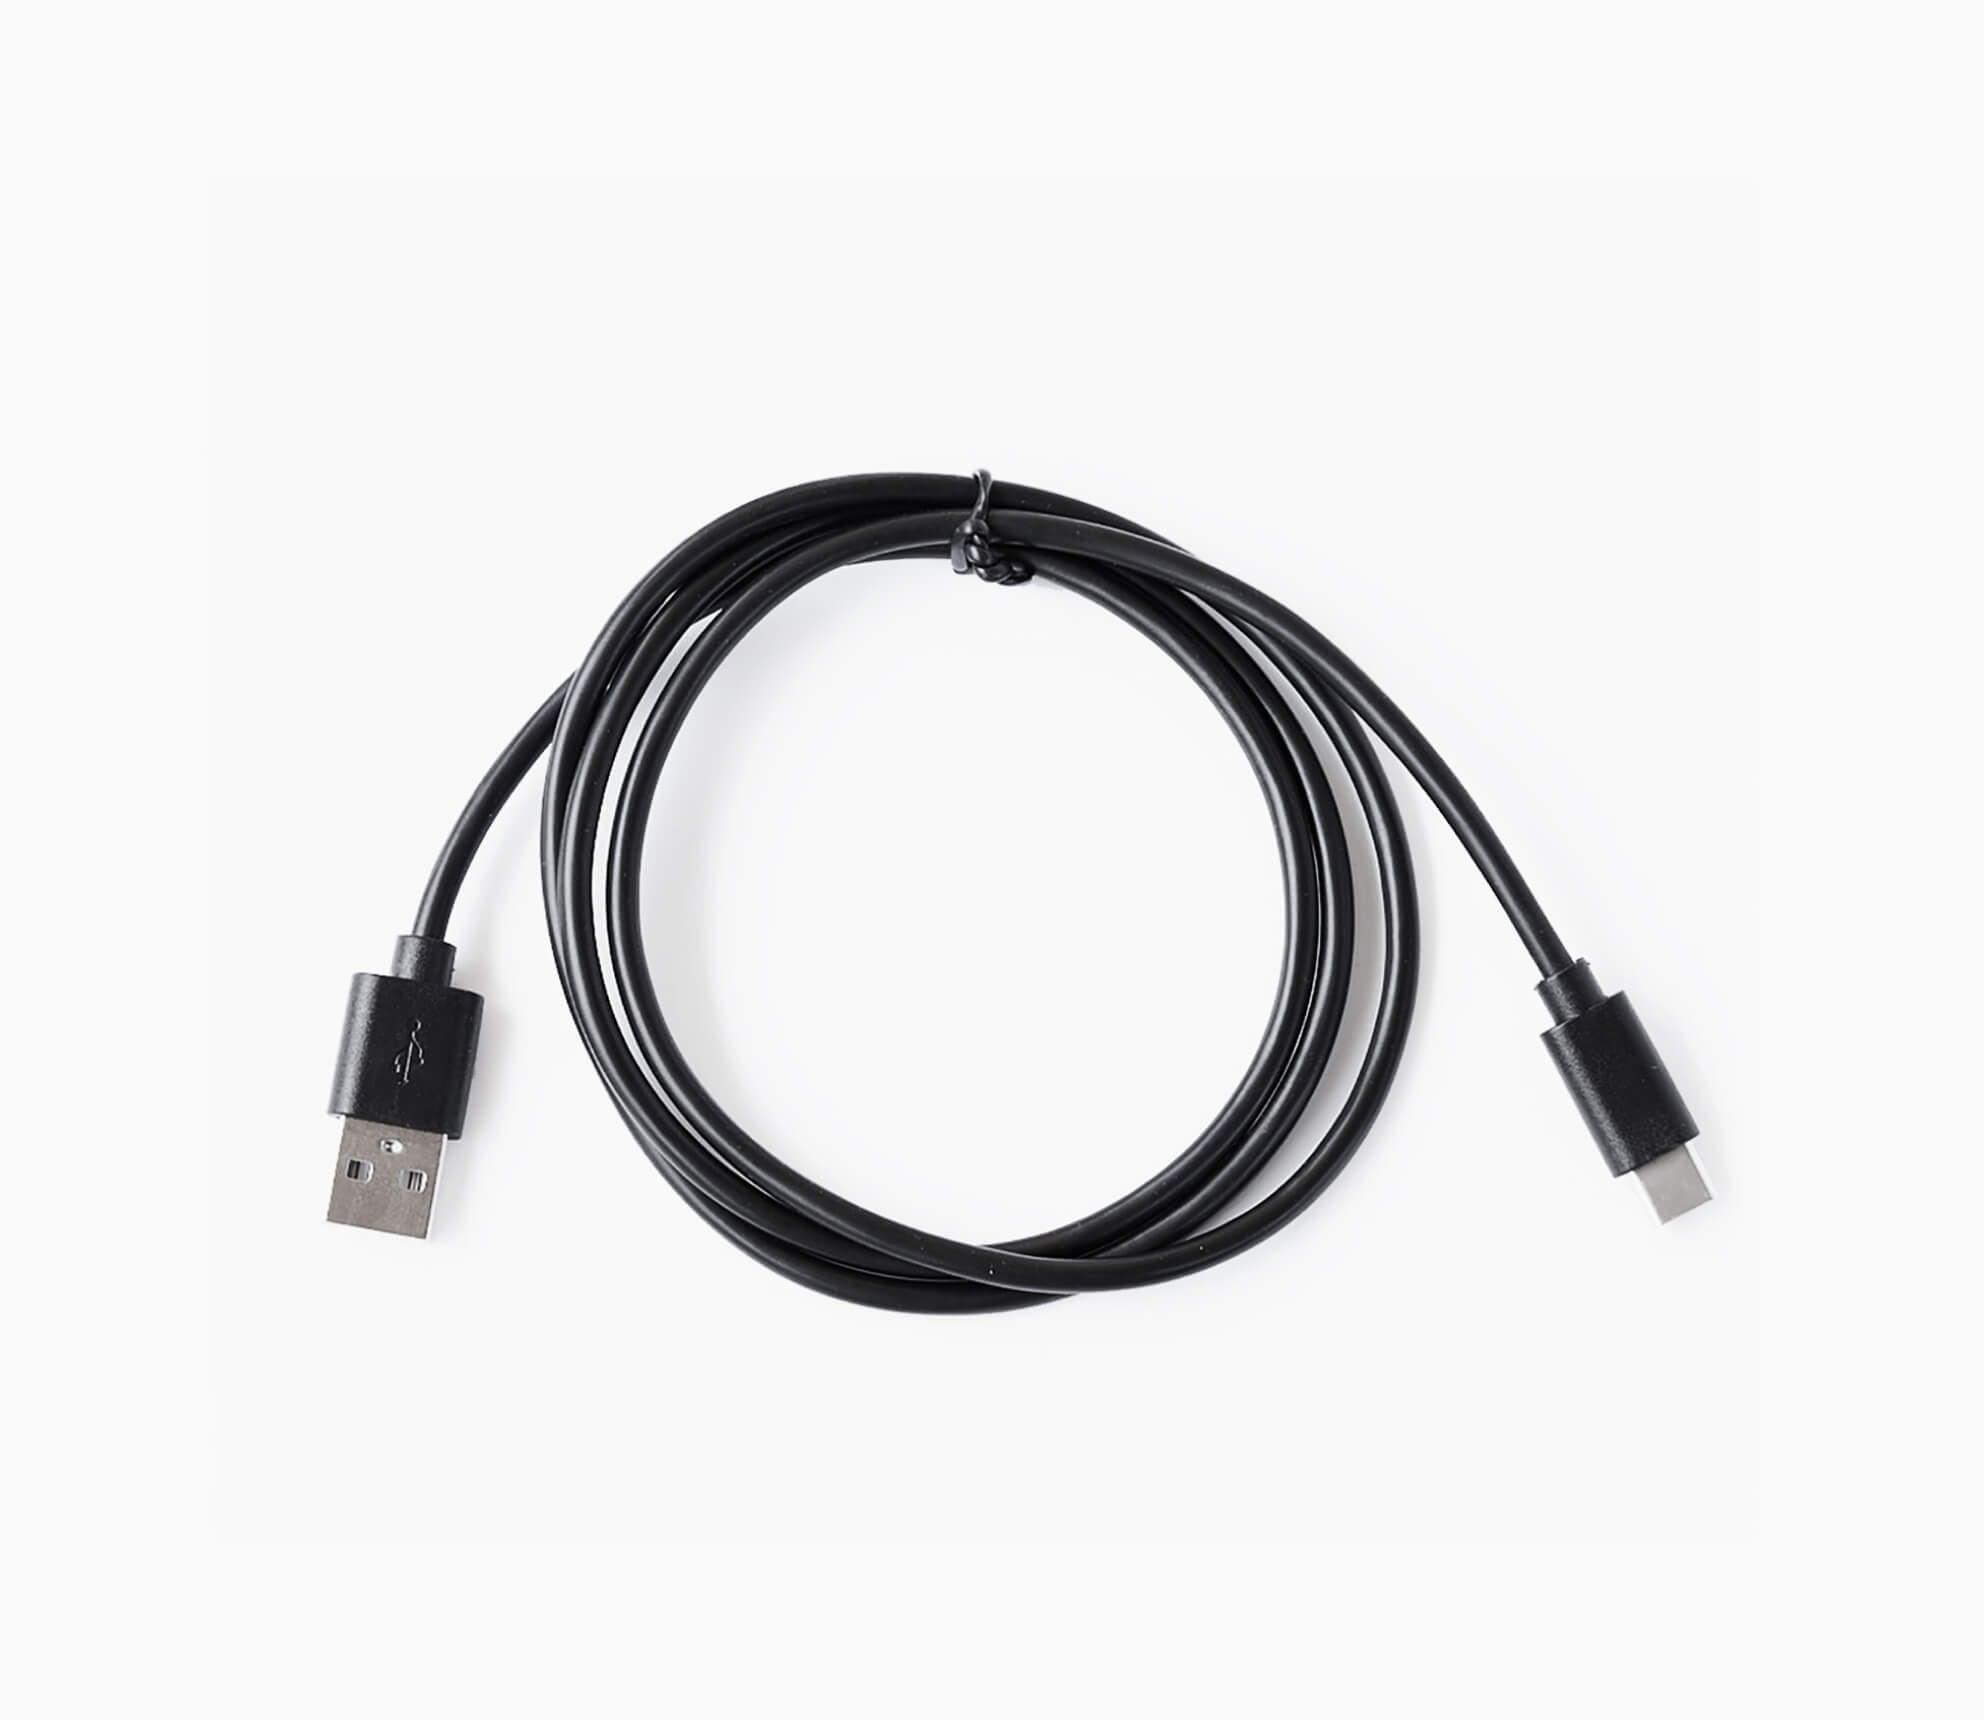 EPOC X USB cable